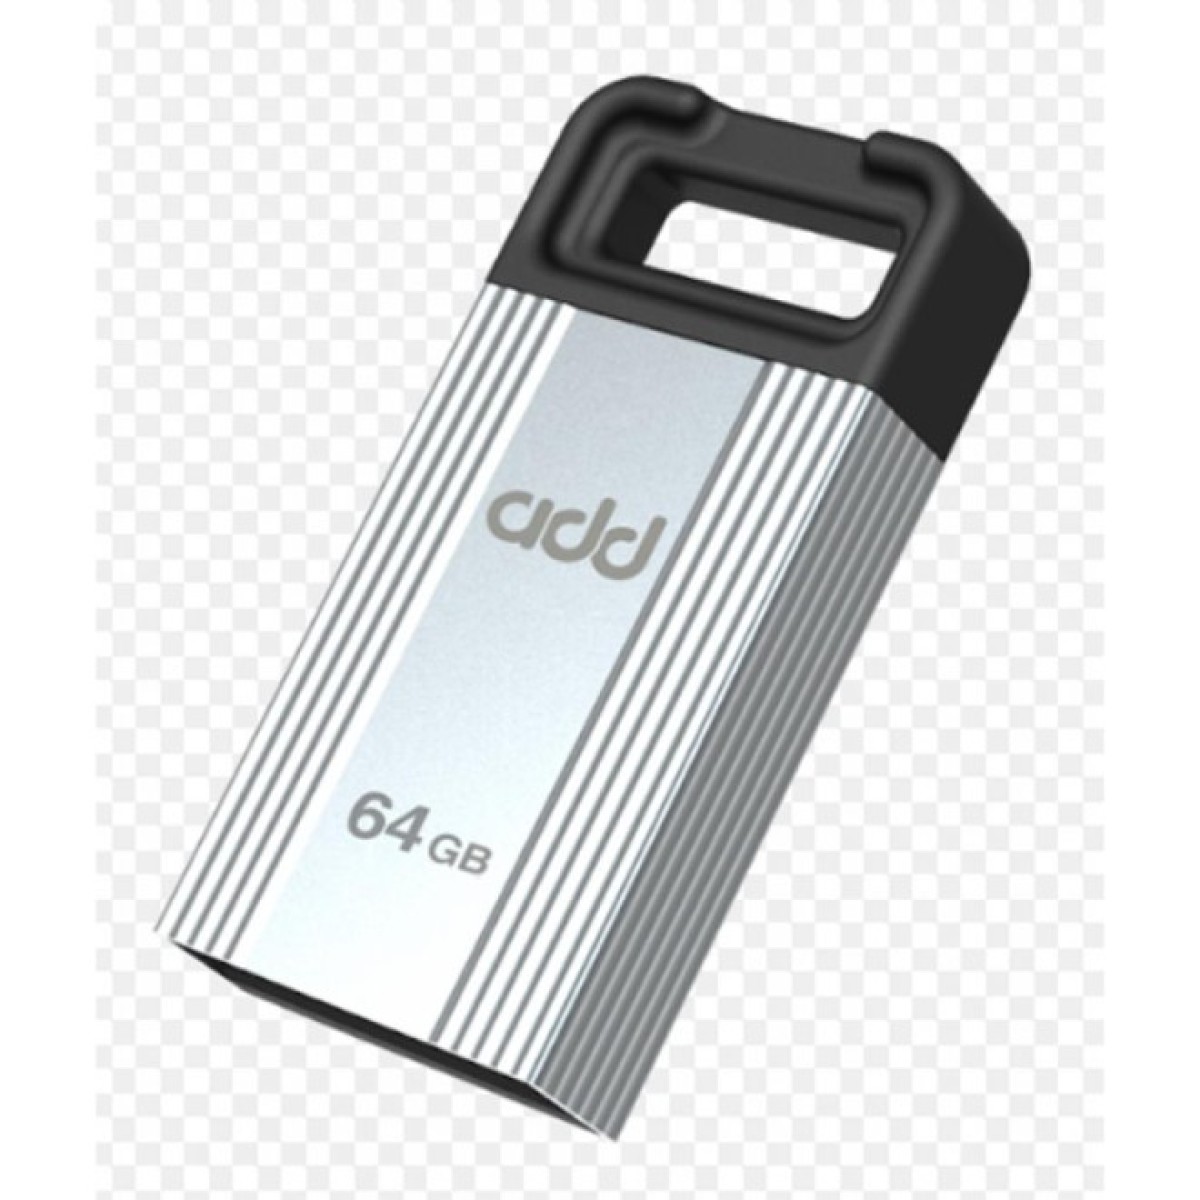 USB флеш накопитель AddLink 64GB U30 Silver USB 2.0 (ad64GBU30S2) 256_256.jpg